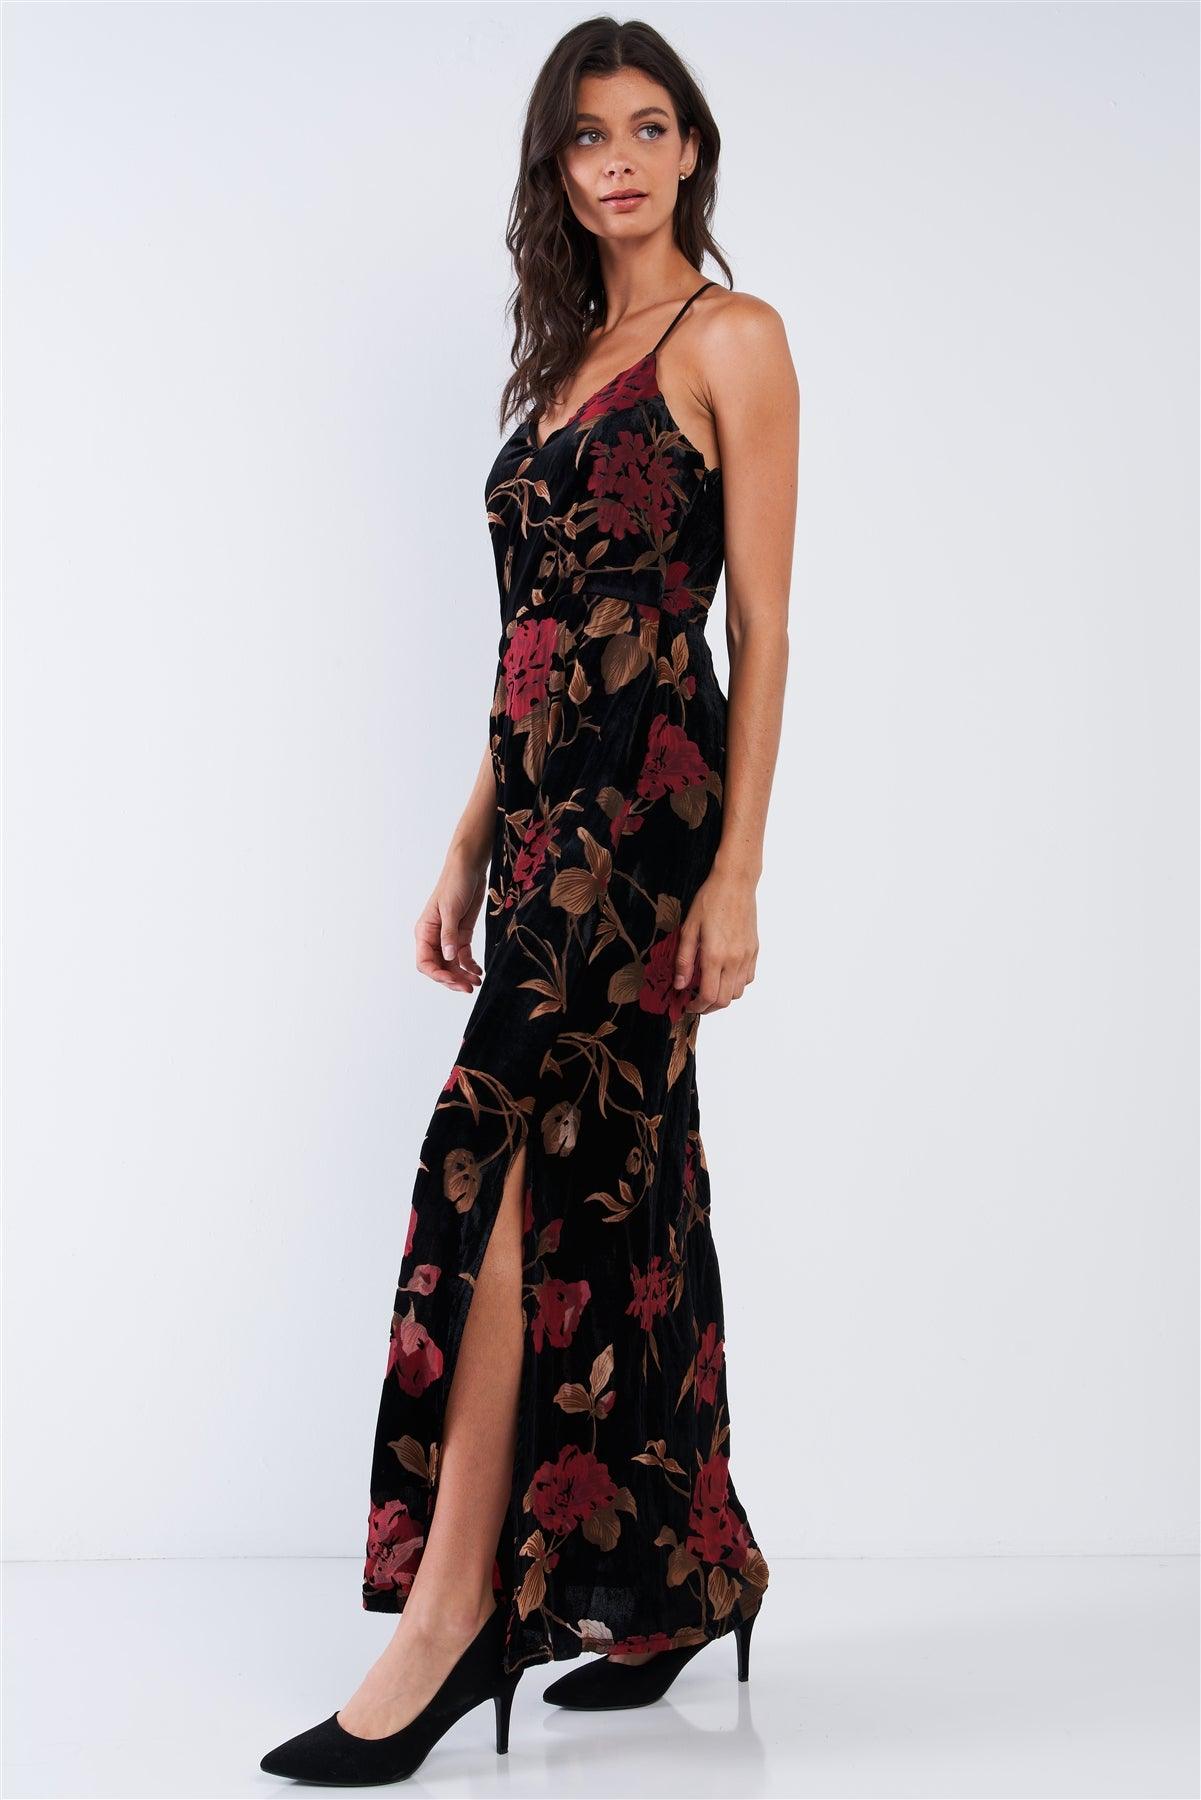 Black Velvet Multi Color Floral Print V-Neck Criss-Cross Back Straps Maxi Dress /3-1-2